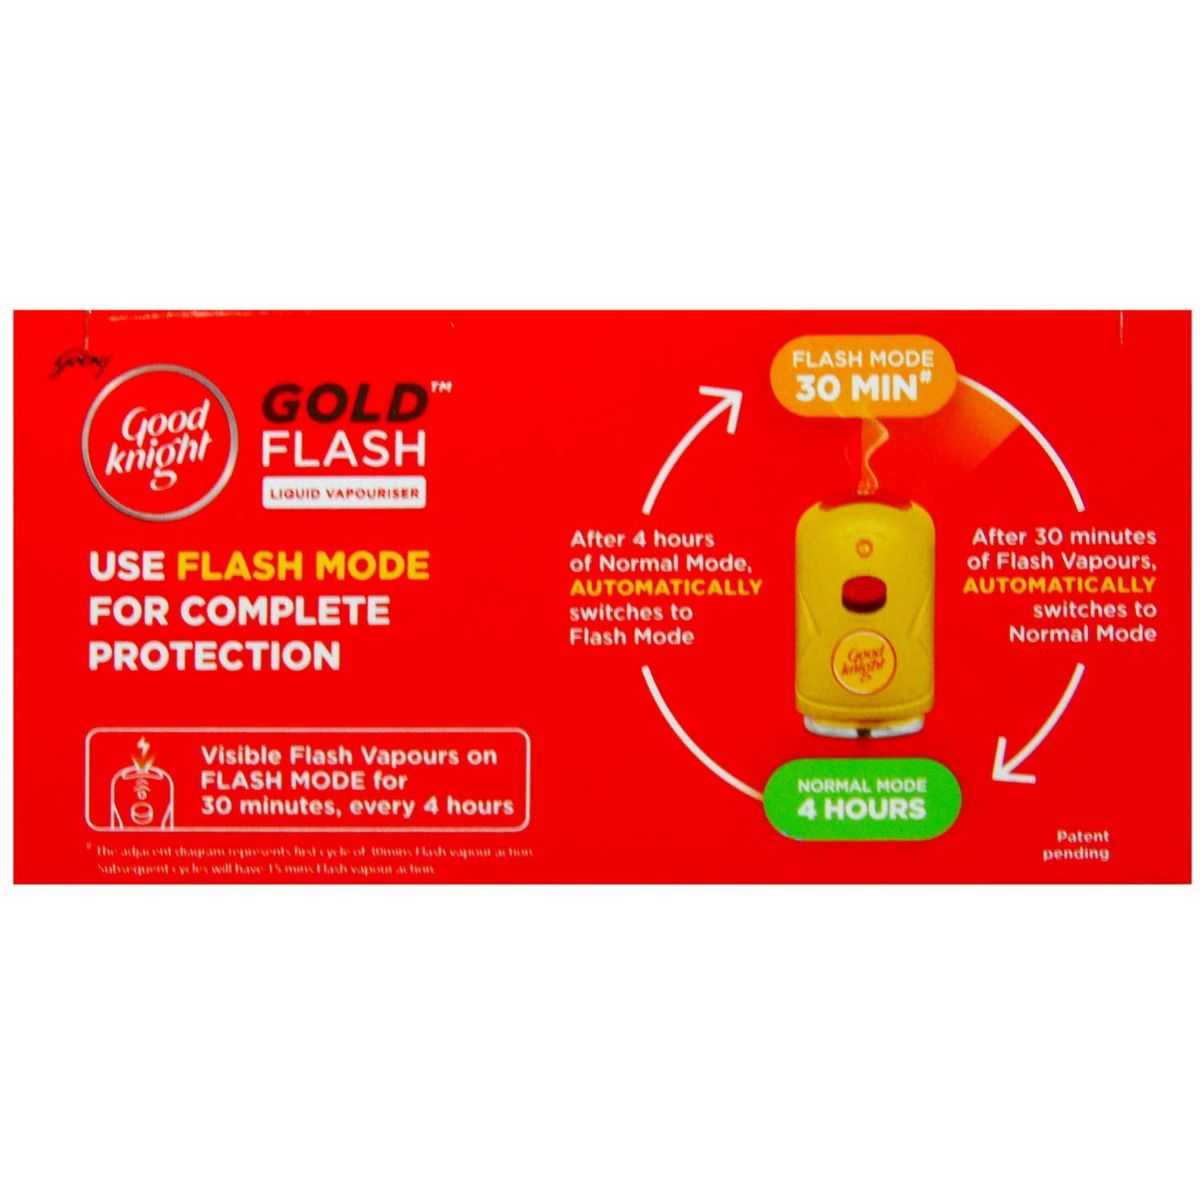 Good Knight Gold Flash Machine + Refill, 1 Kit, Pack of 1 